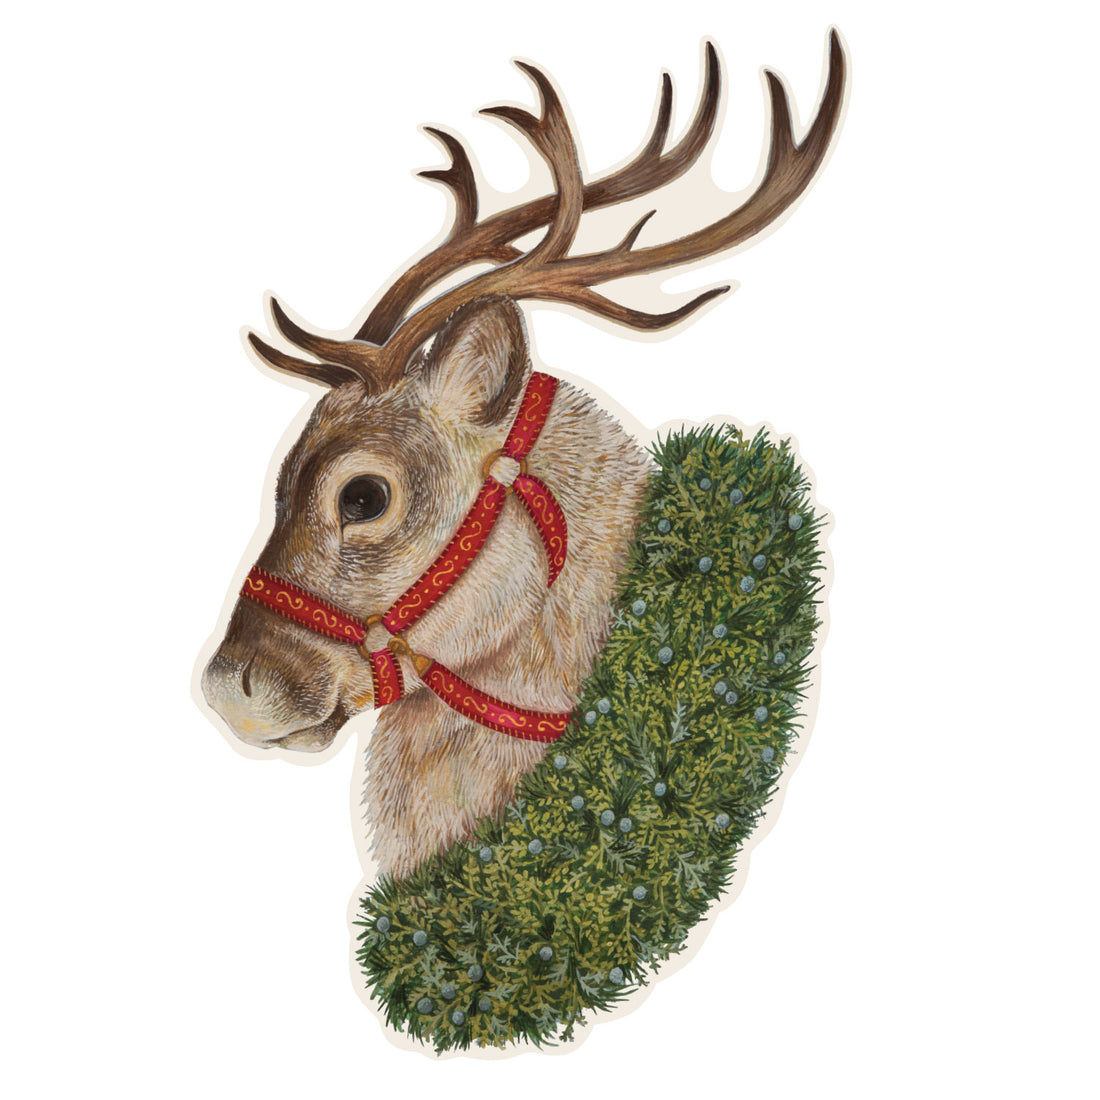 A die-cut, realistic illustration of an antlered reindeer&